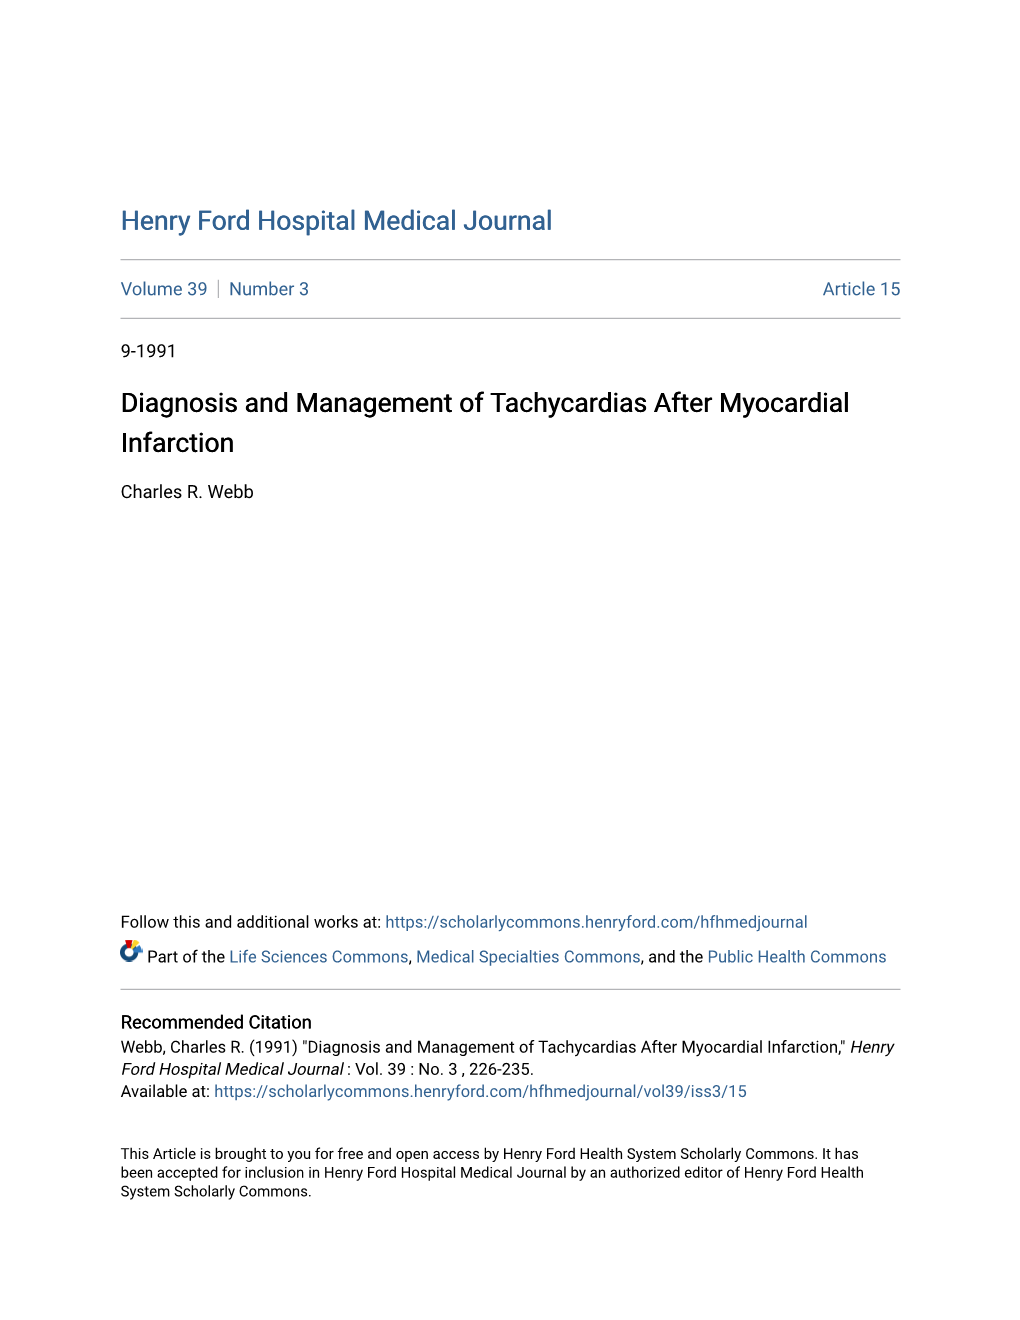 Diagnosis and Management of Tachycardias After Myocardial Infarction